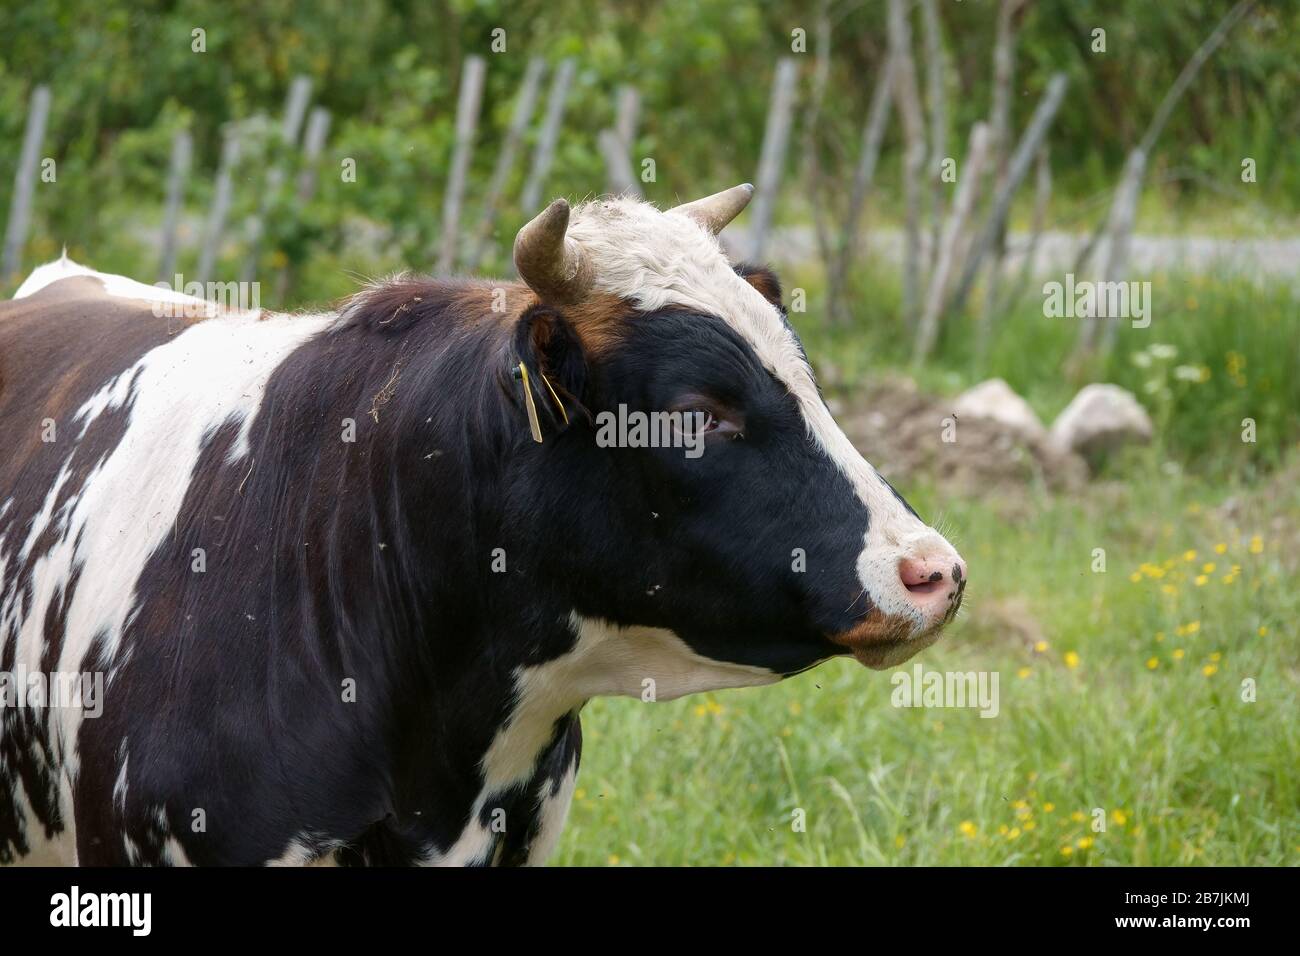 livestock Stock Photo